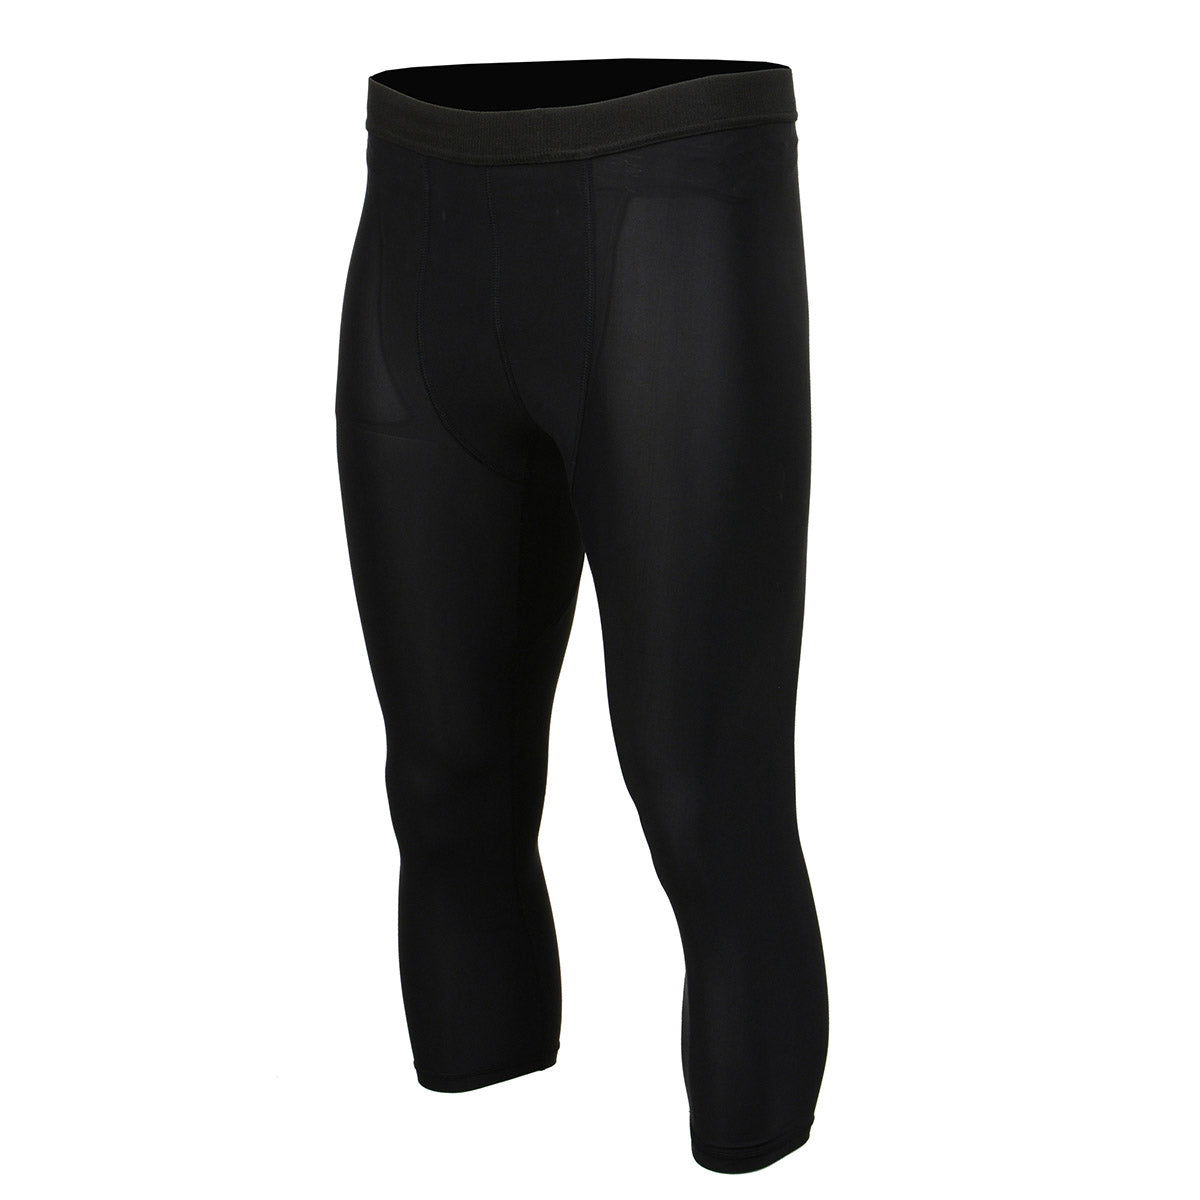 X-Fitness XFM7002 Men's Black Compression Base Layer Workout Pants